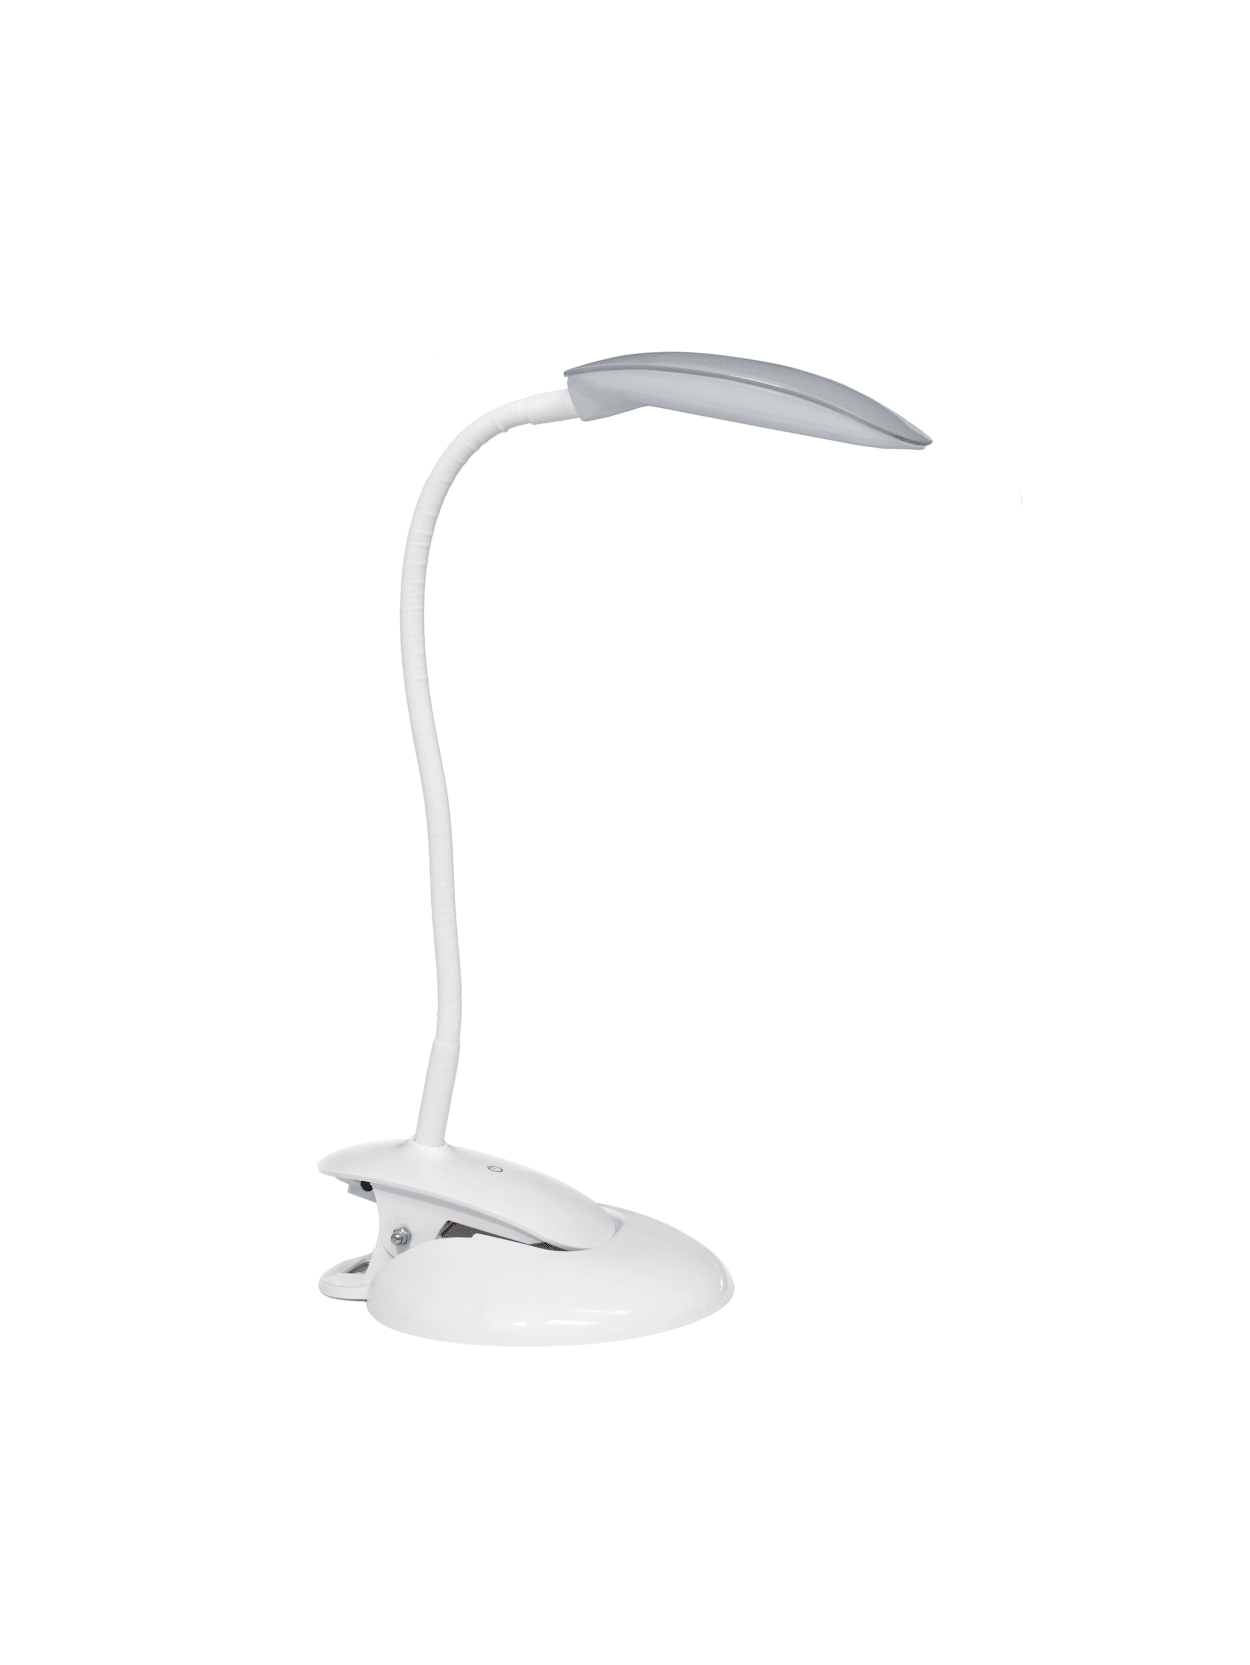 flexi lamp led table lamp